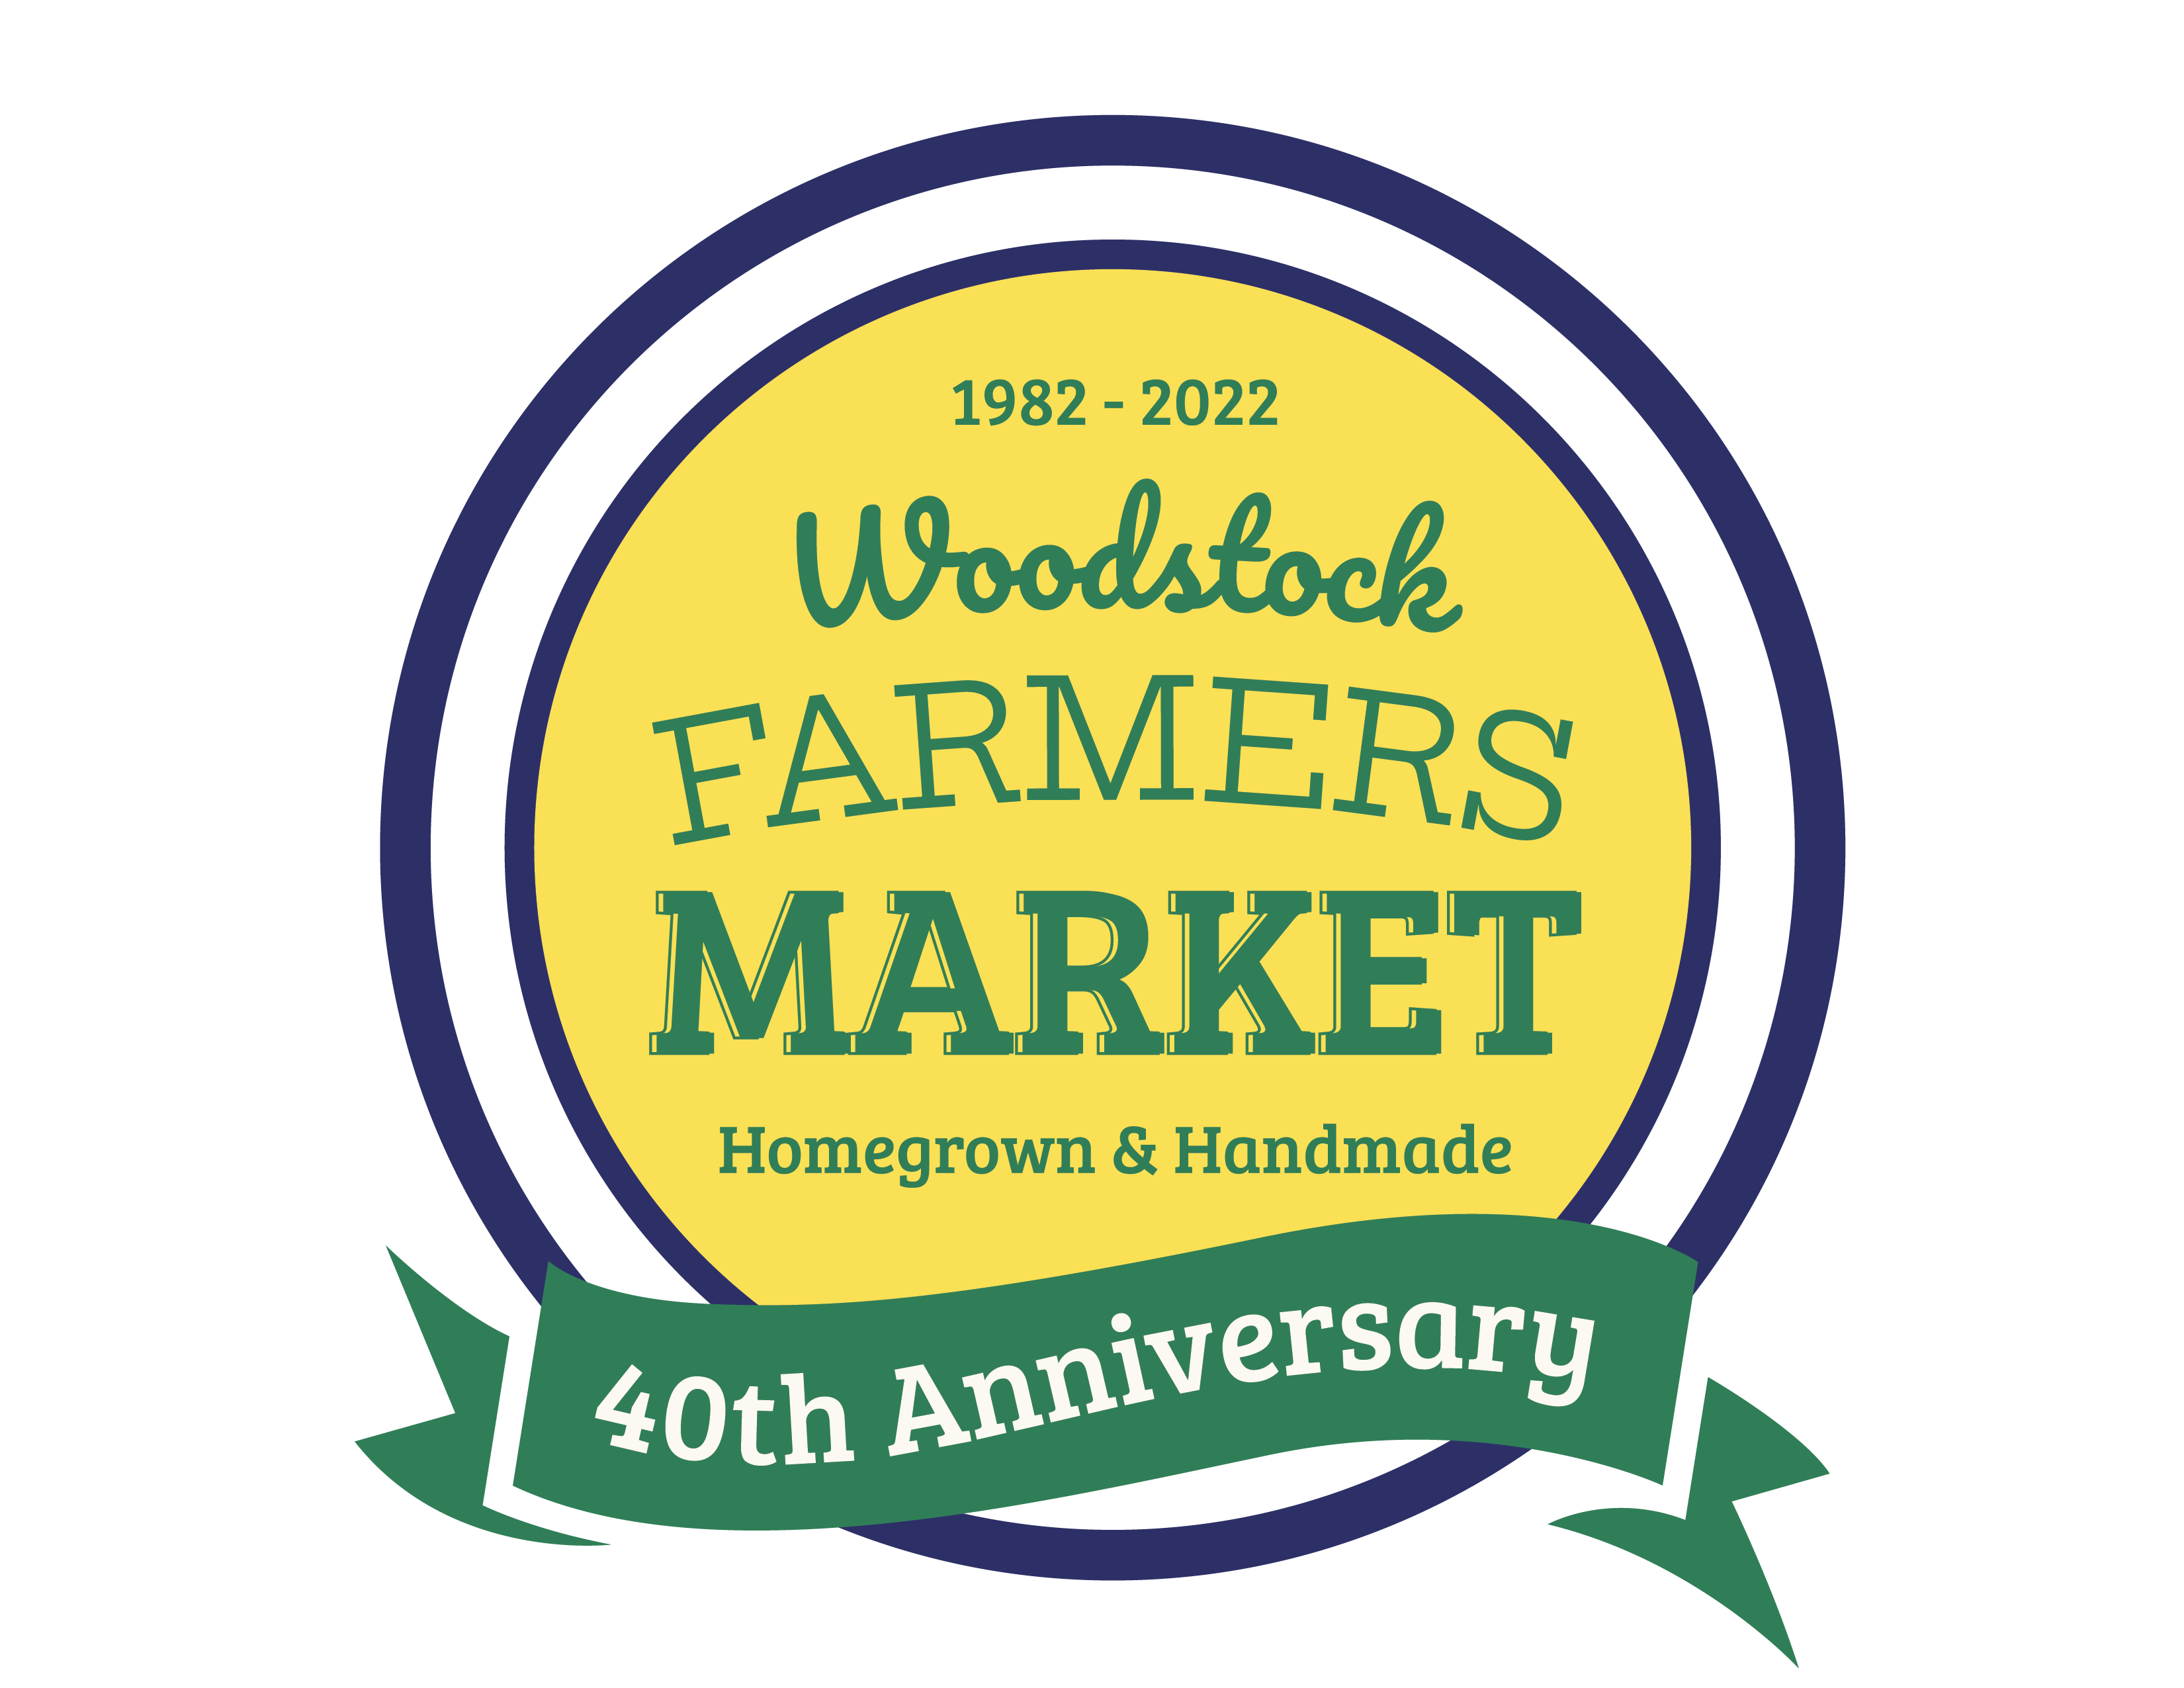 Woodstock Farmer's Market 40th Anniversary Logo